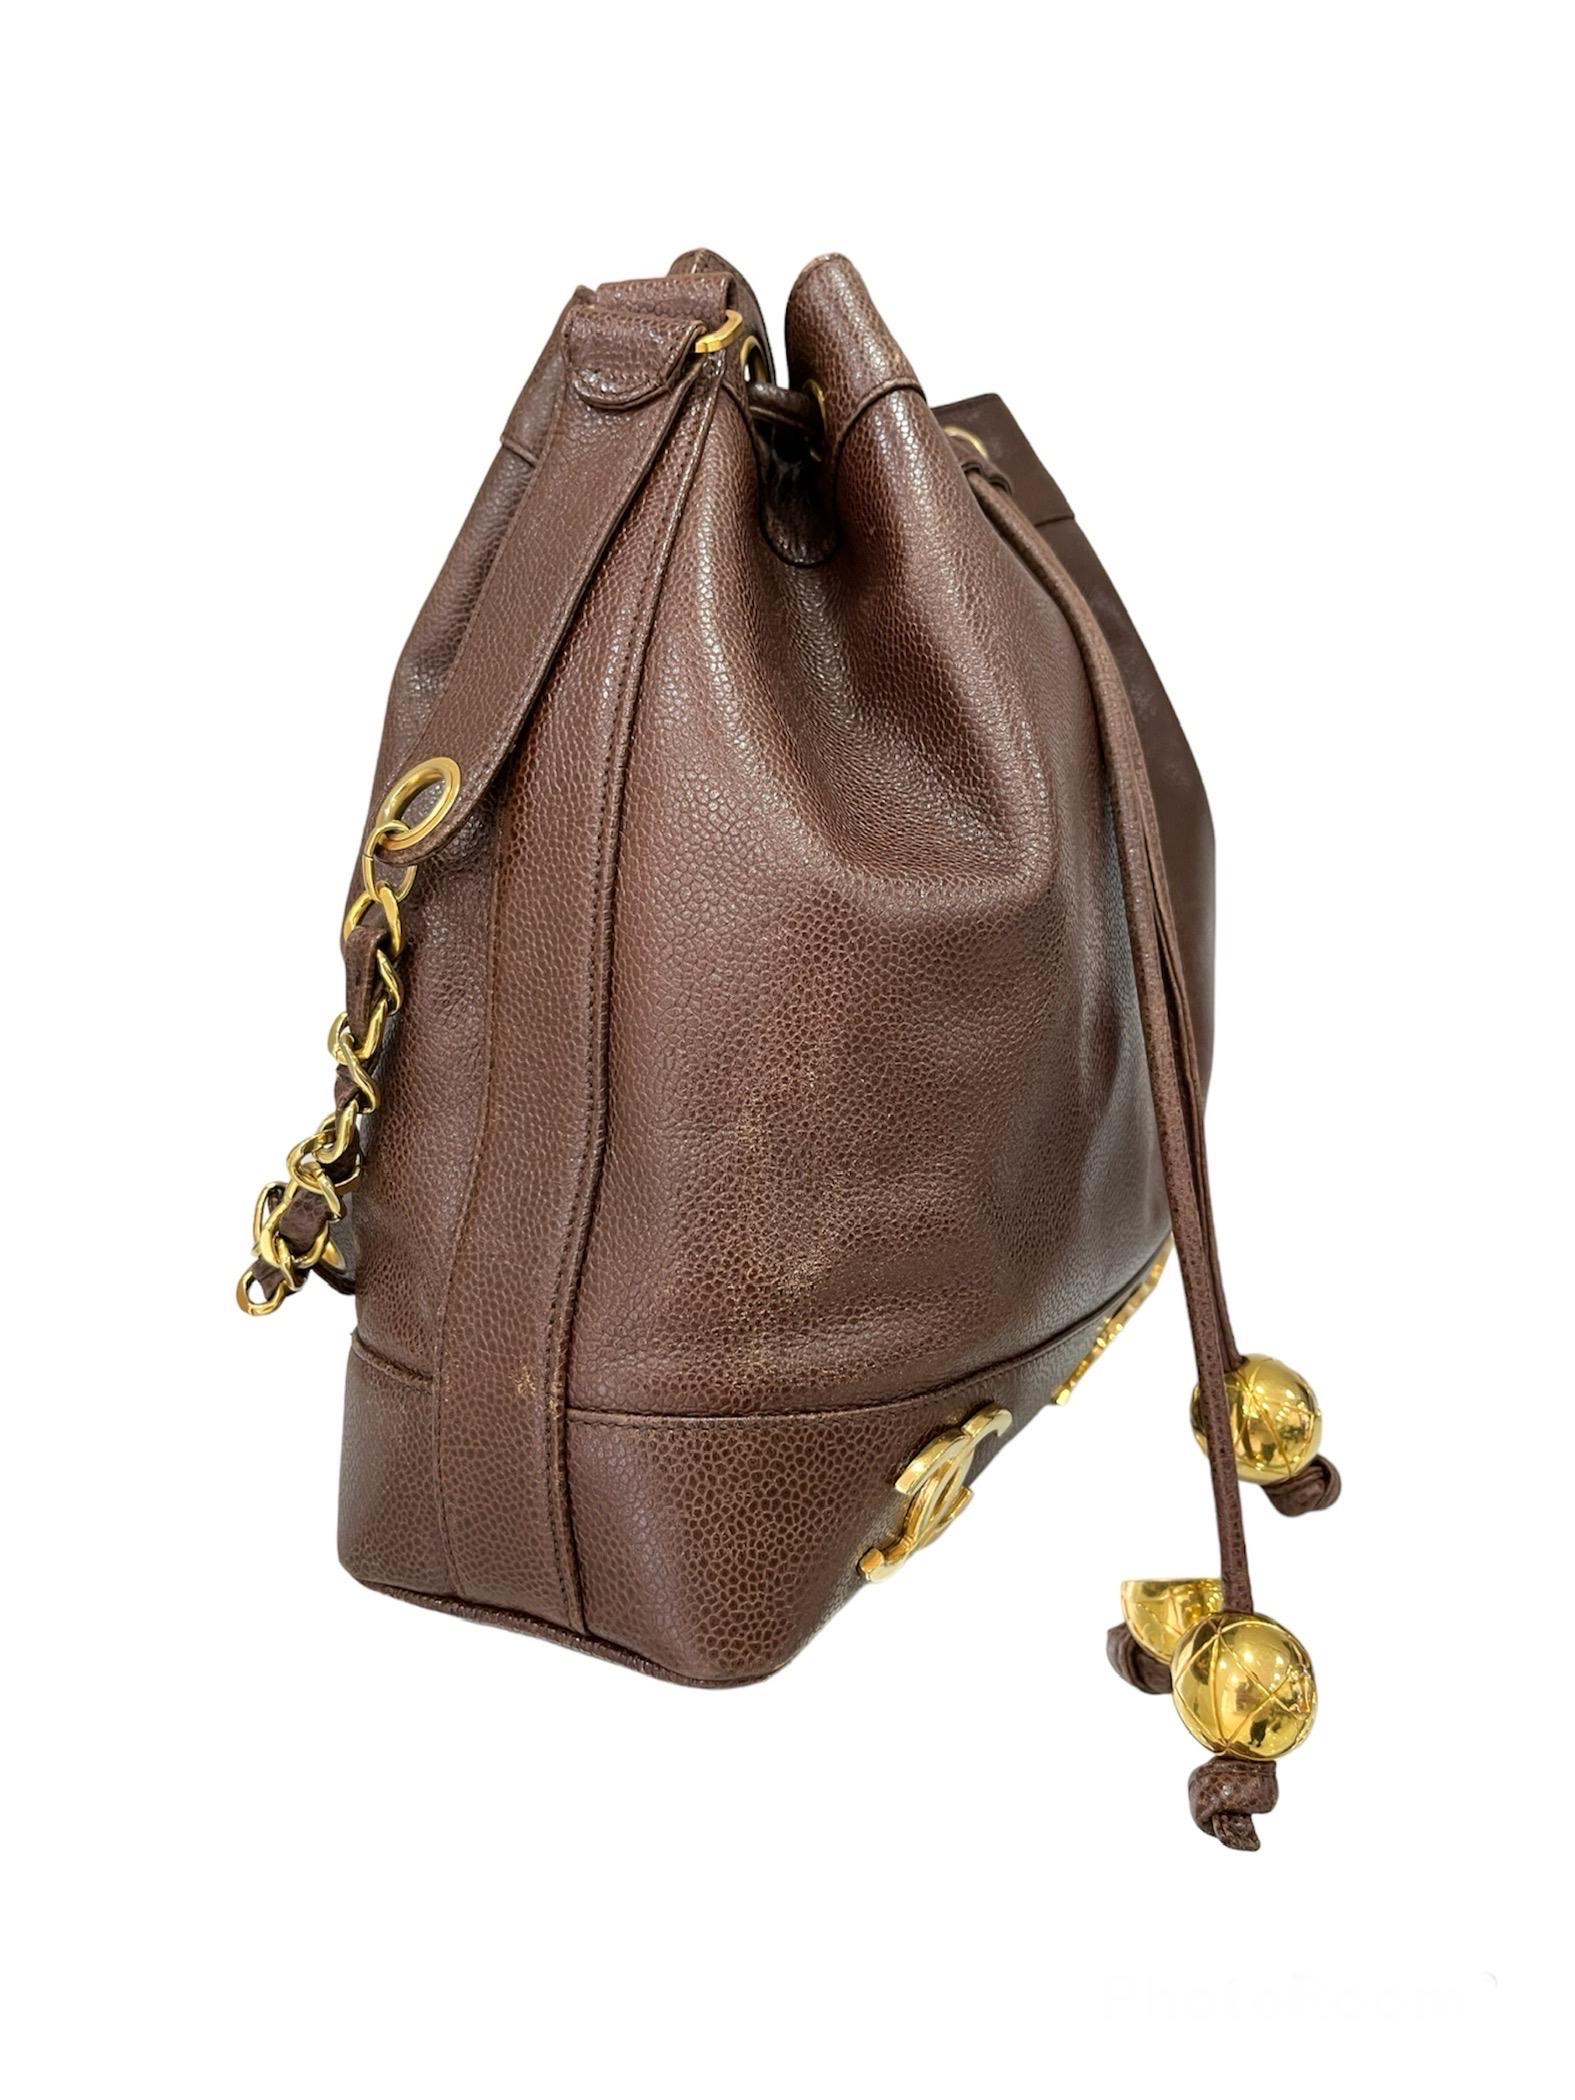 1990 Chanel Bucket Triple CC Vintage Shoulder Bag In Good Condition For Sale In Torre Del Greco, IT